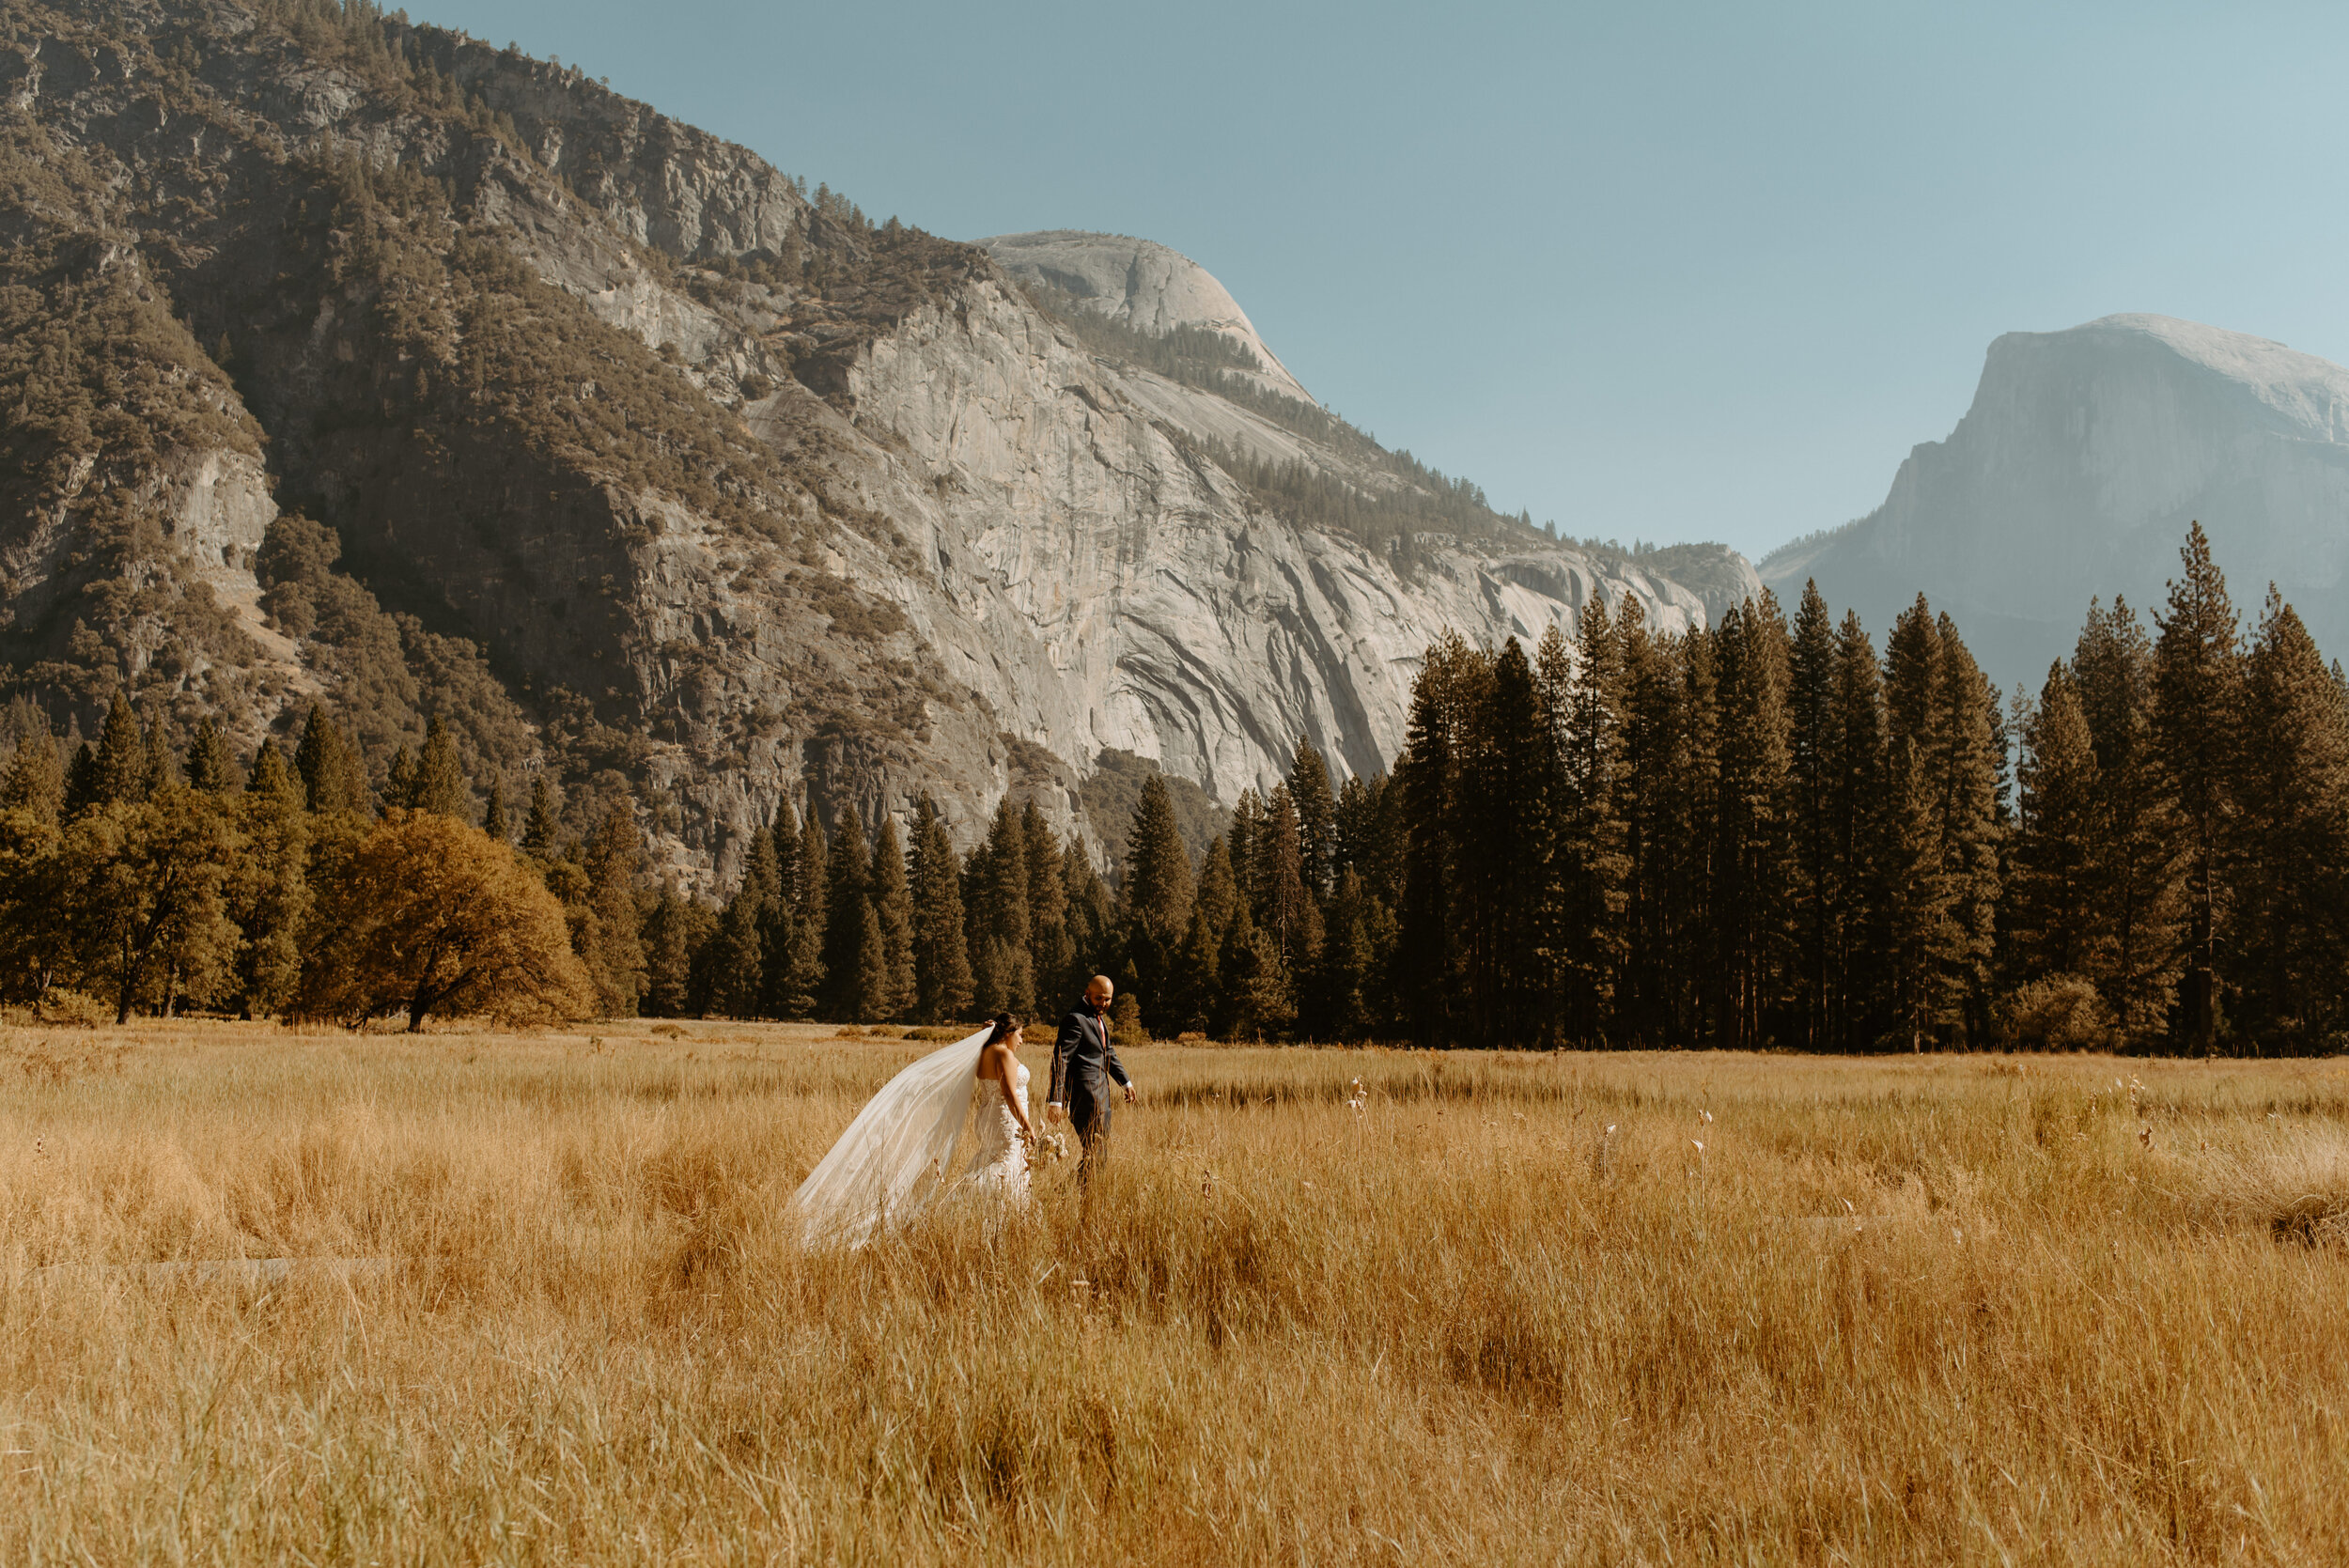 Glacier Point Elopement | Yosemite National Park Elopement and Wedding Photographer | Sunrise adventure elopement | California Elopement Photographer | Yosemite Meadows